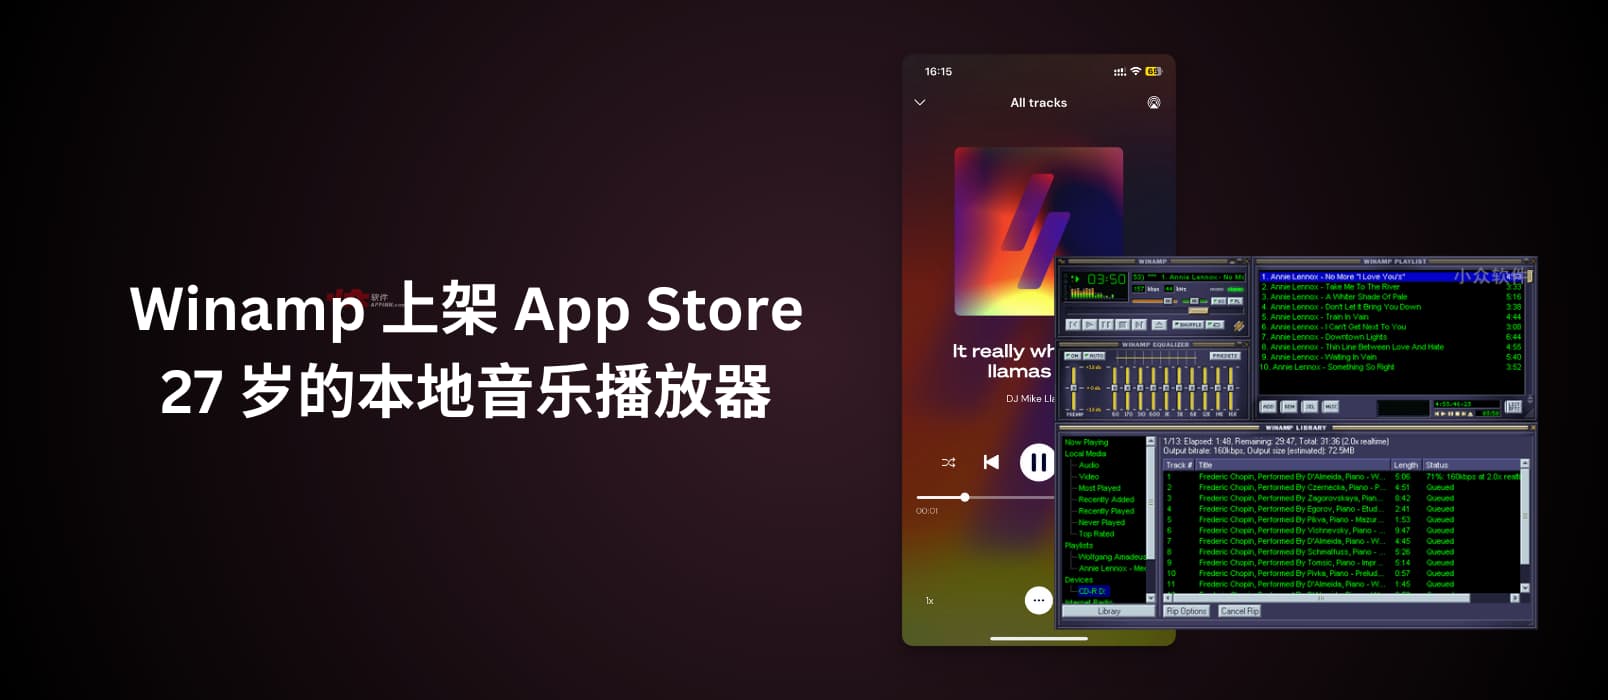 Winamp 正式上架 App Store，27 岁的本地音乐播放器，没有更换皮肤功能 1